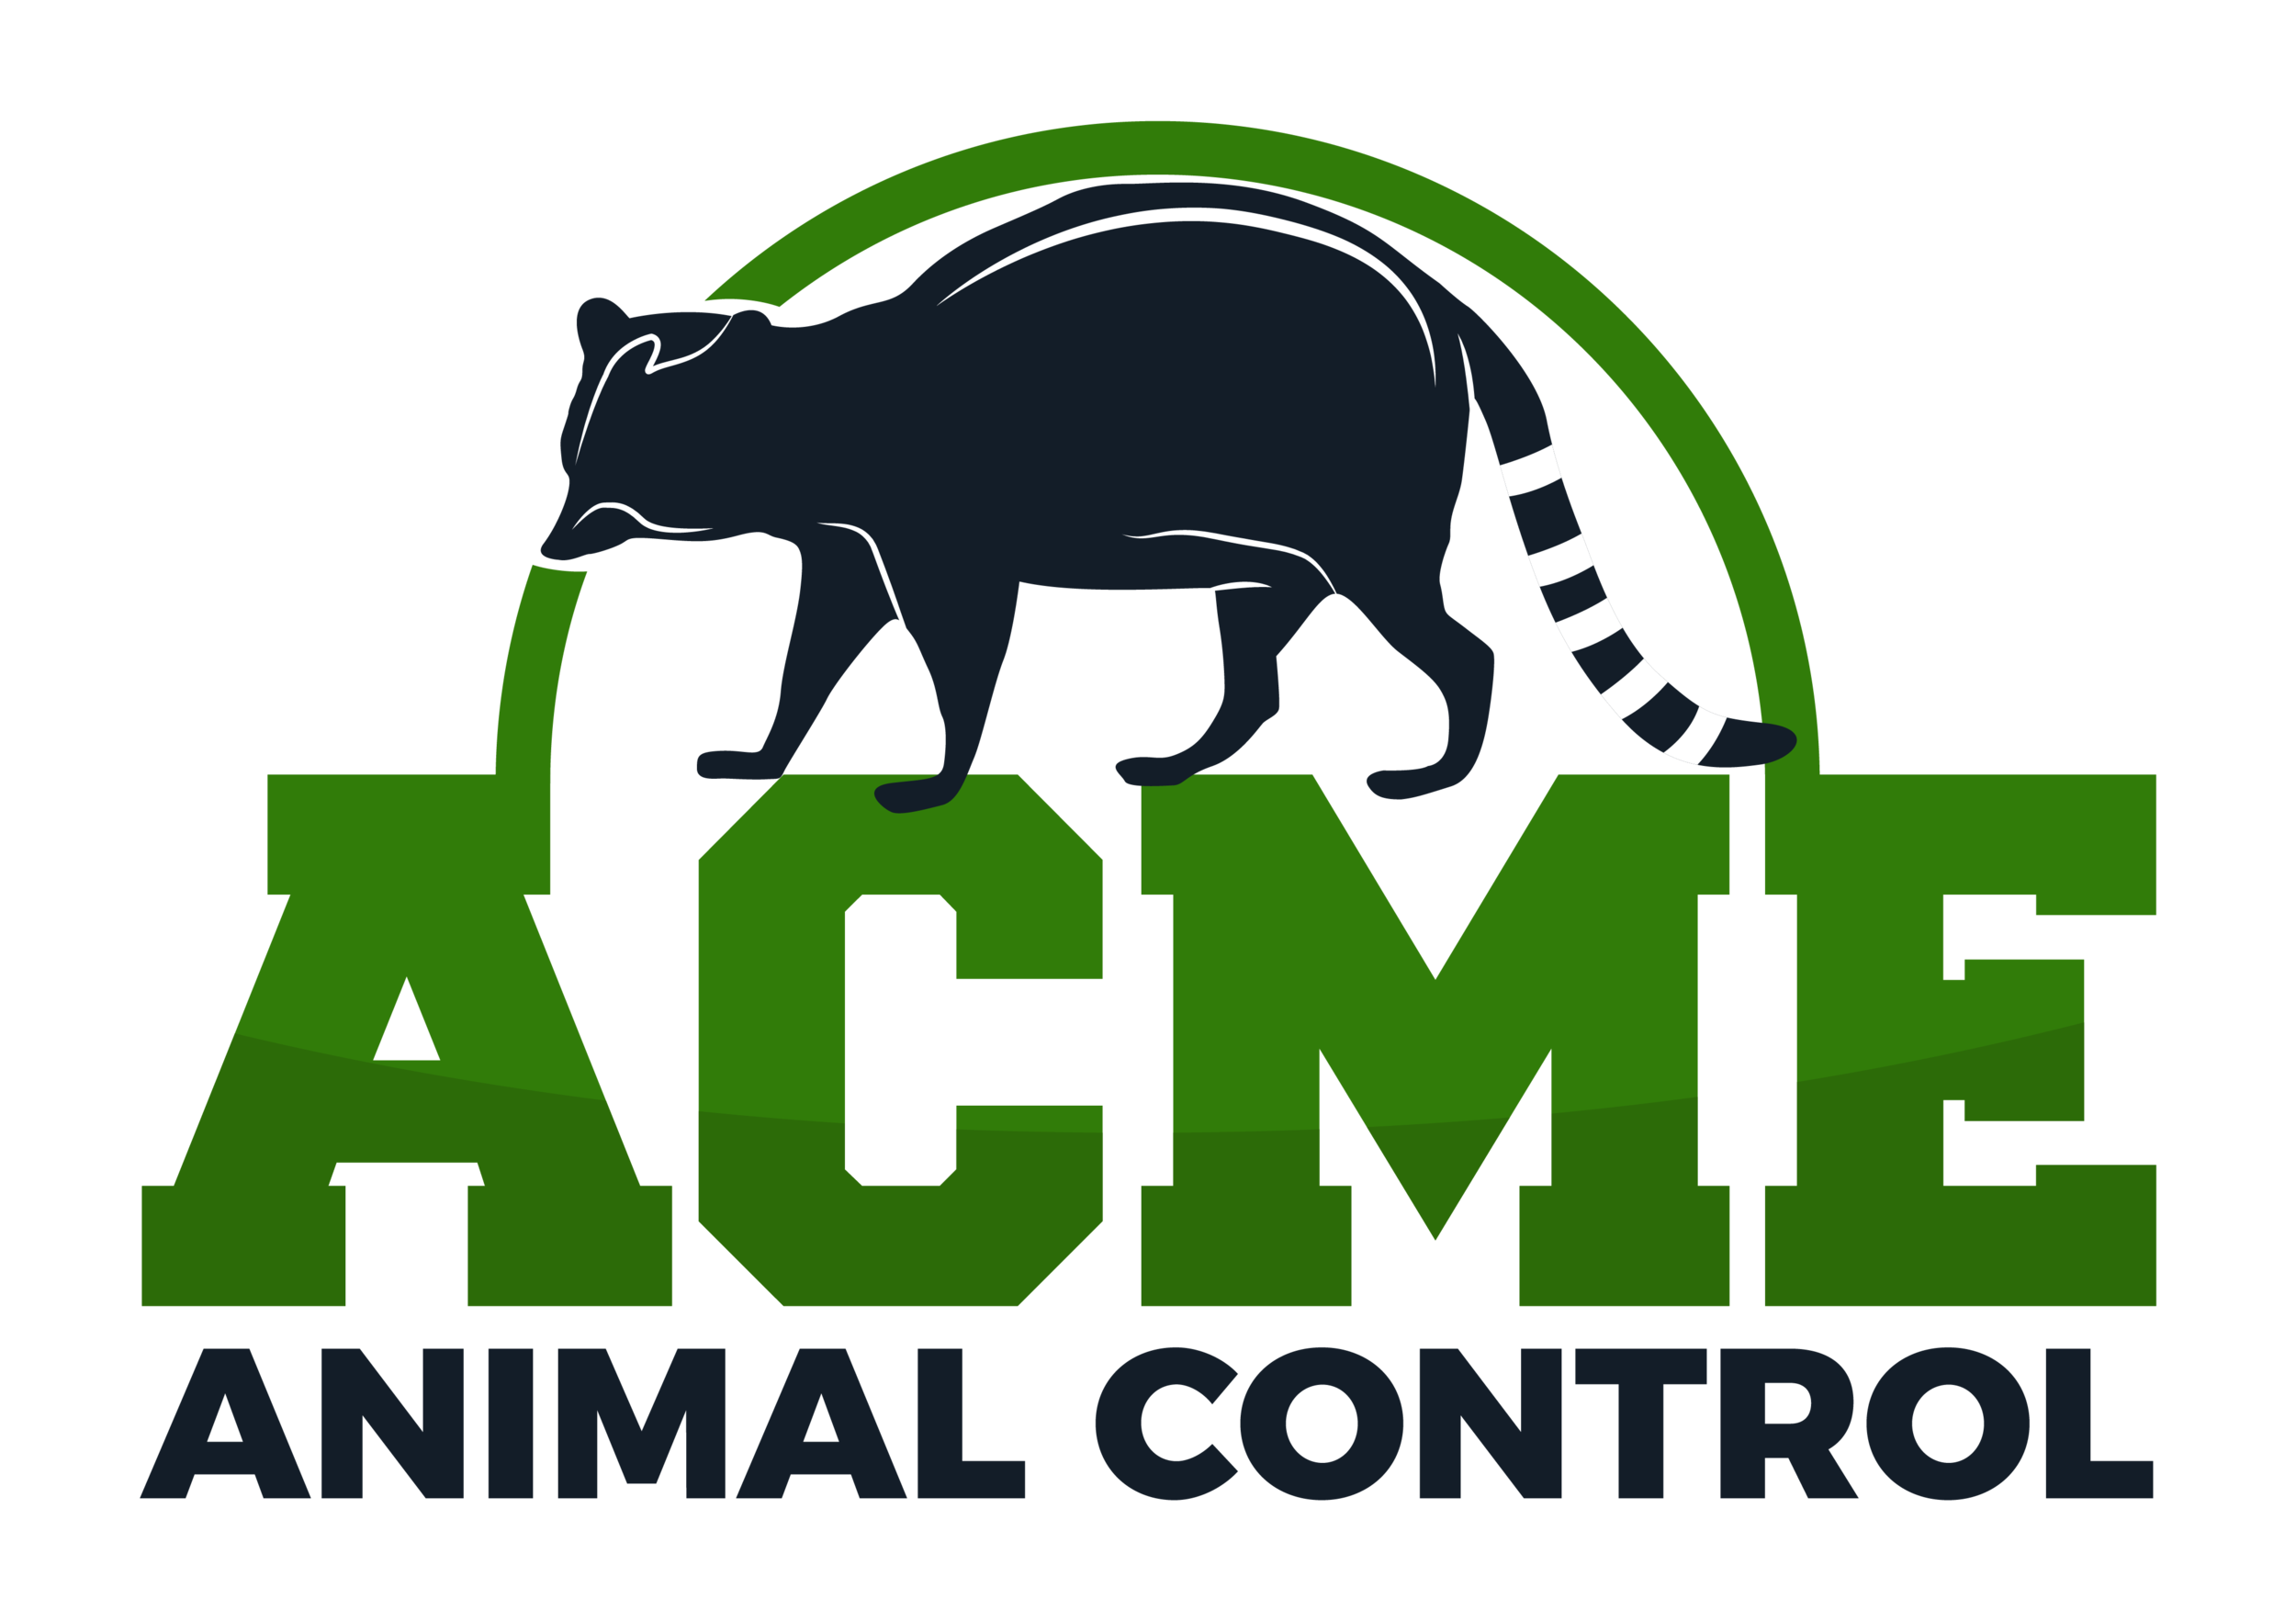 ACME Animal Control